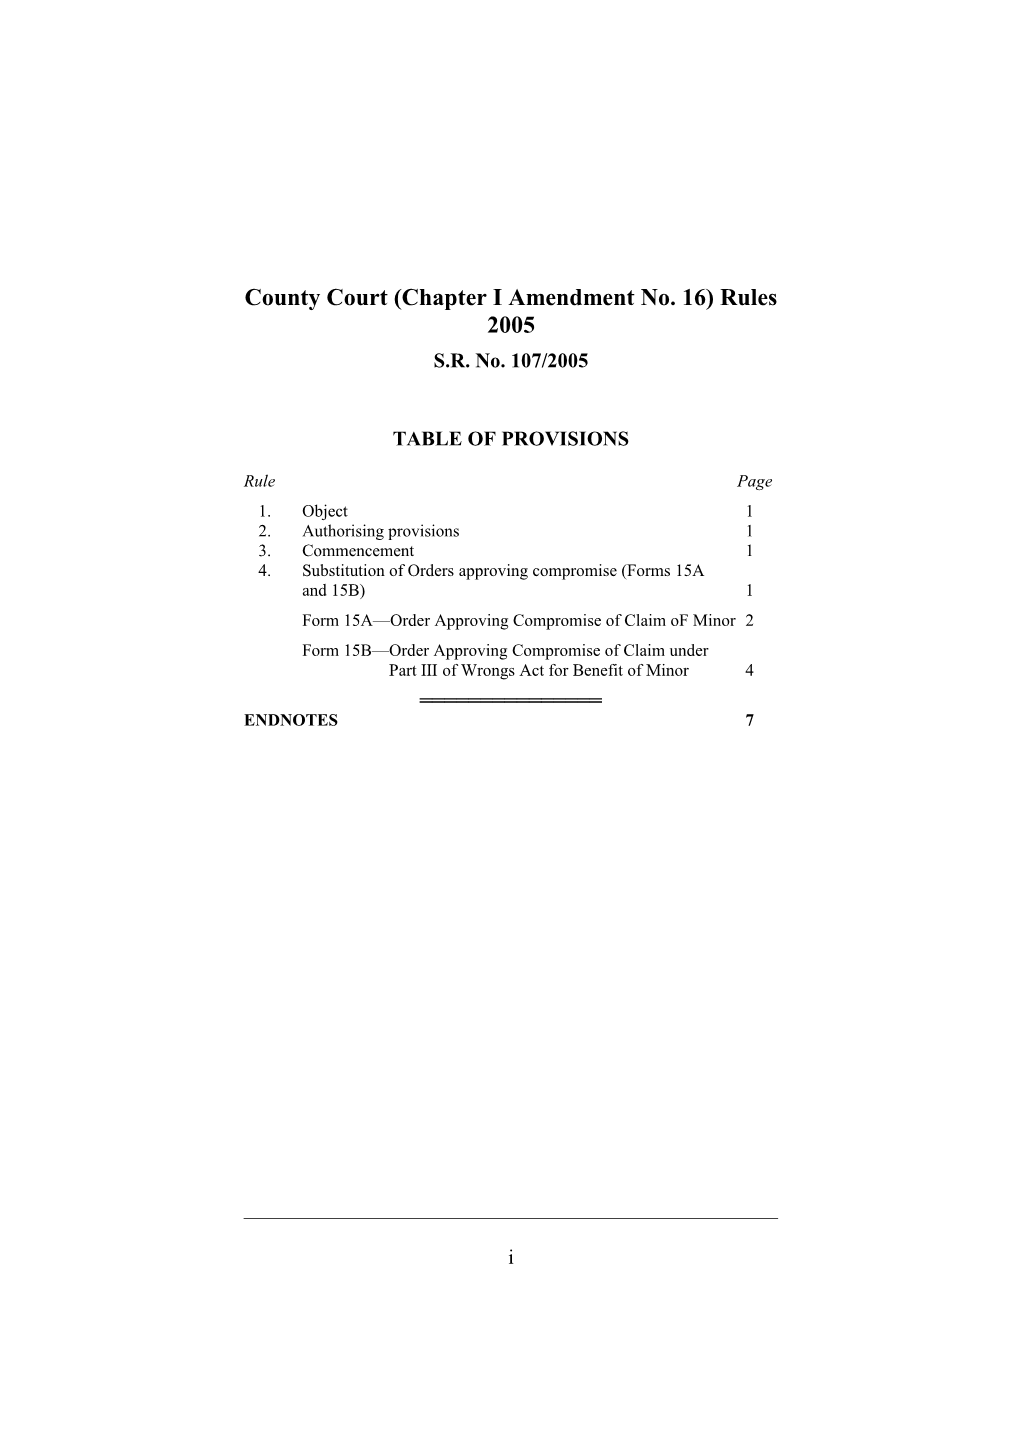 County Court (Chapter I Amendment No. 16) Rules 2005